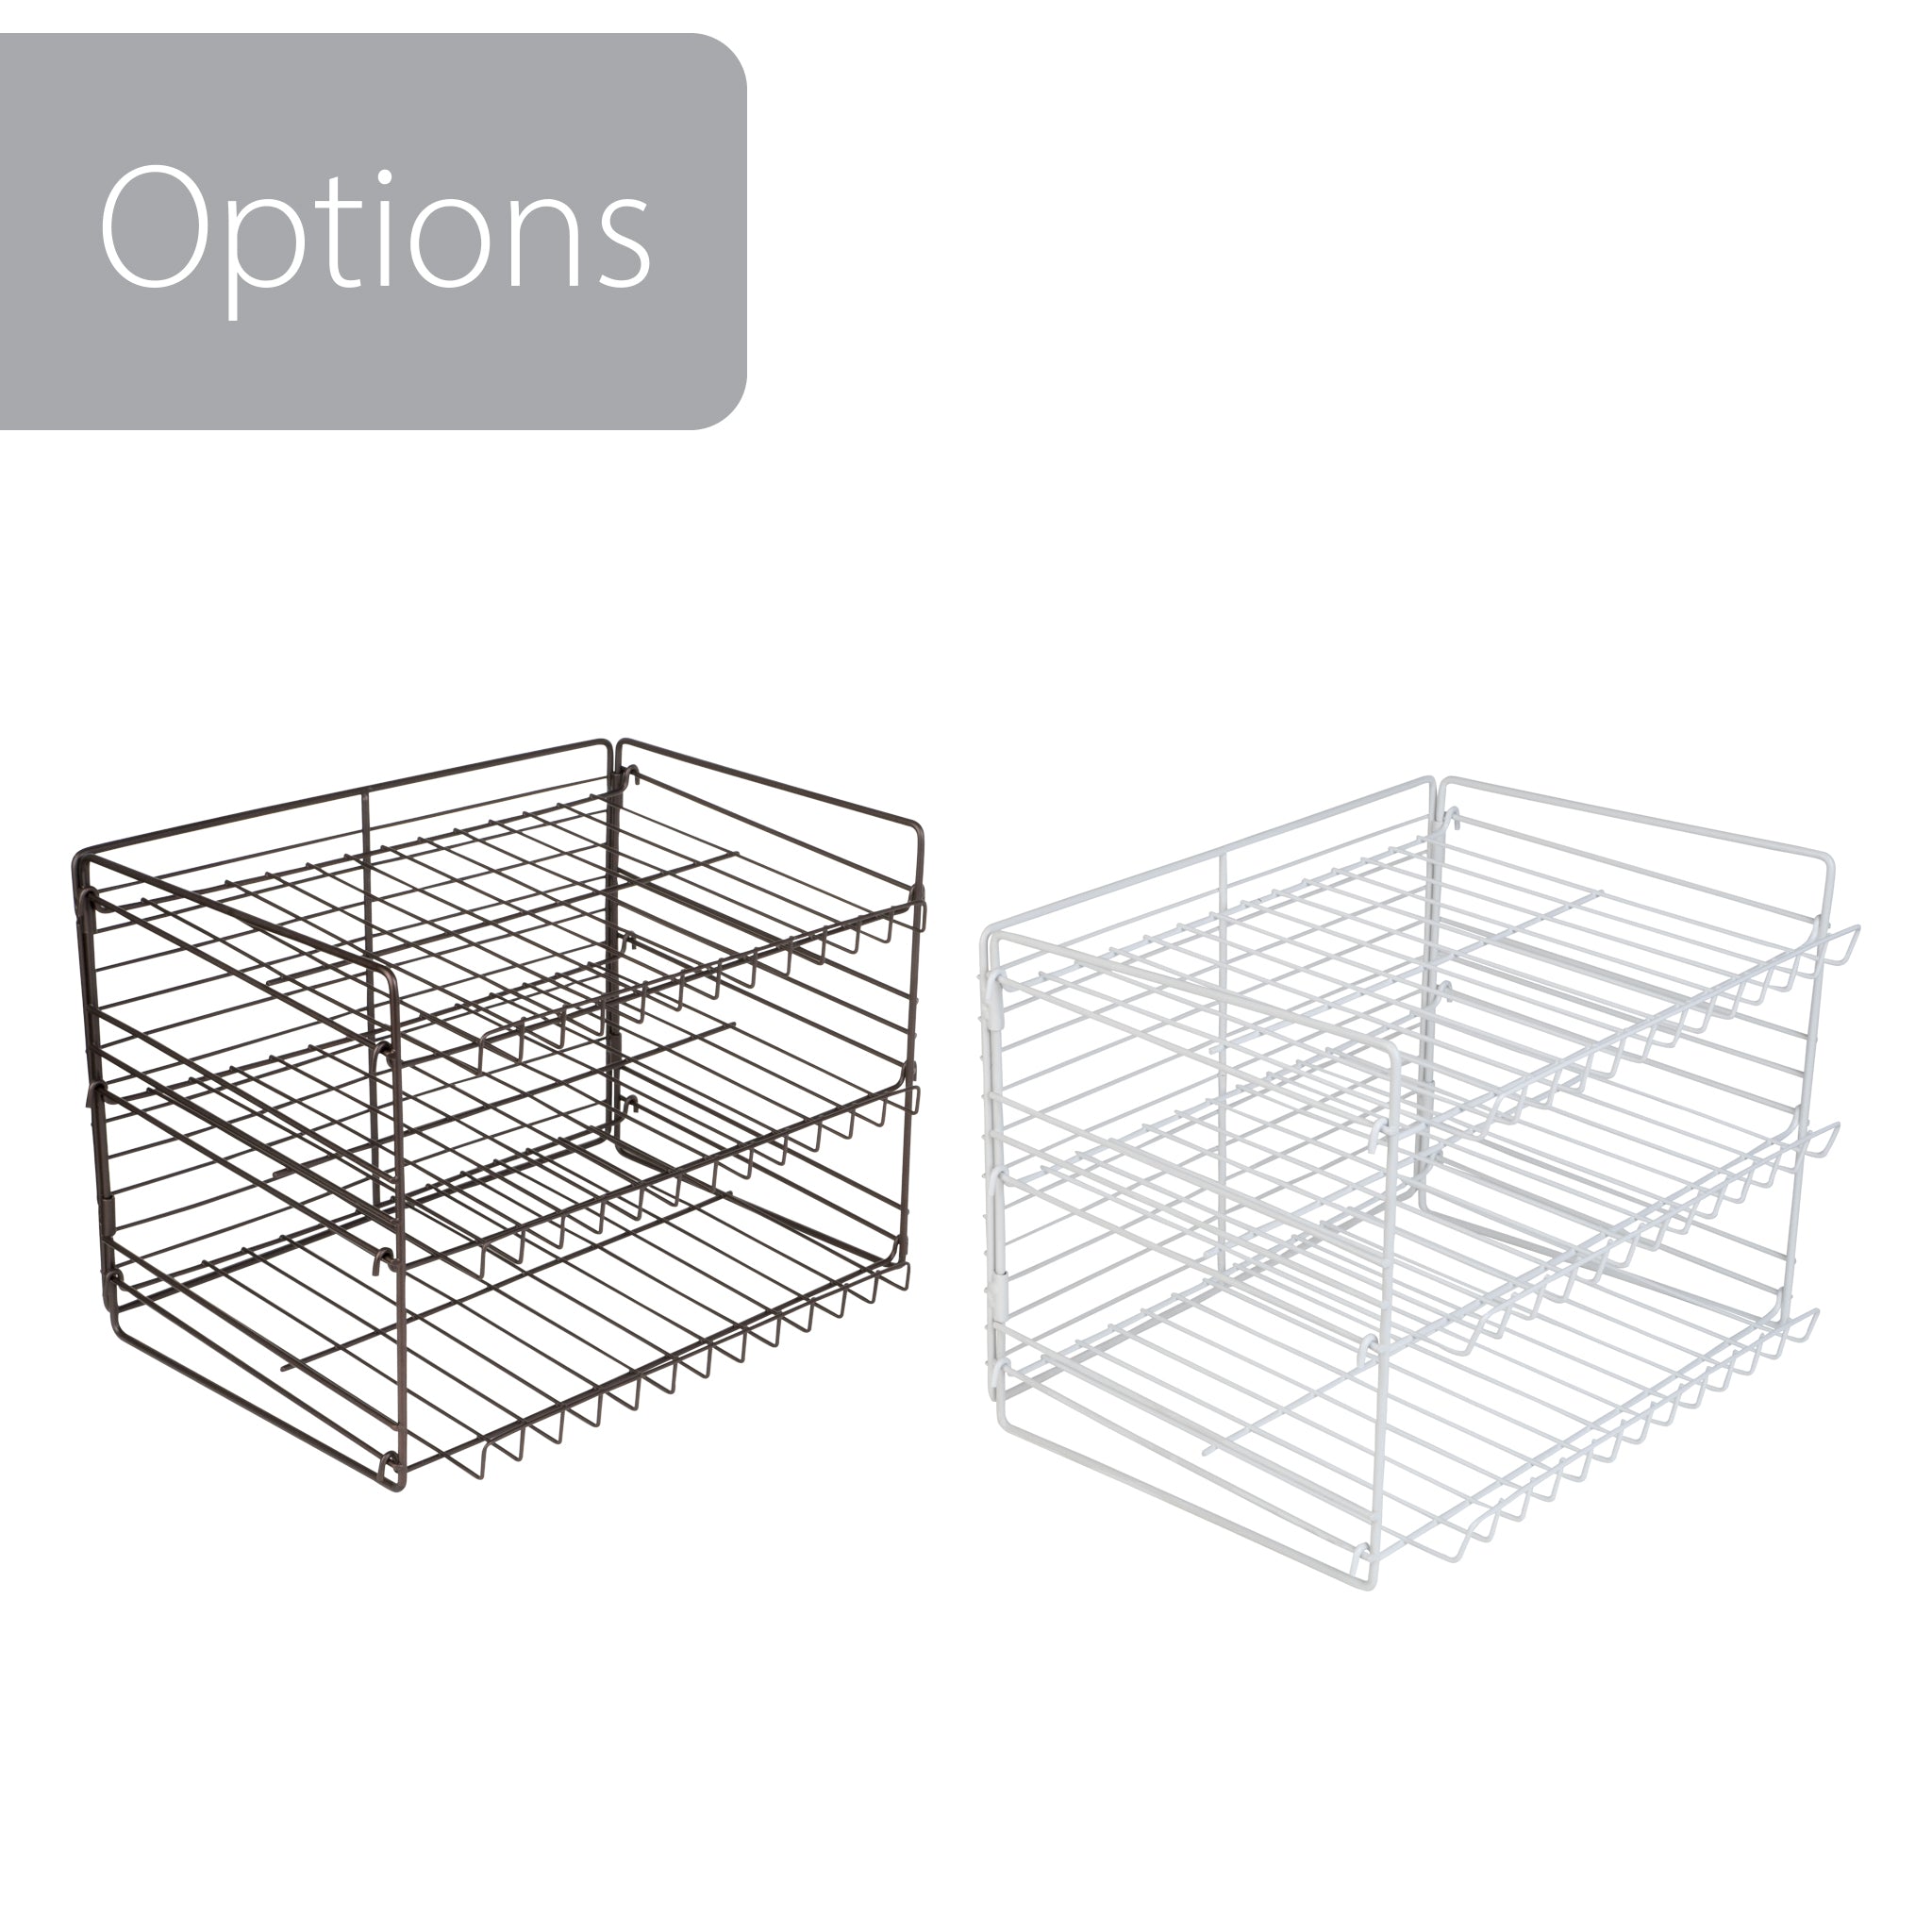 3-Tier Can Rack Organizer - White - Smart Design® 5